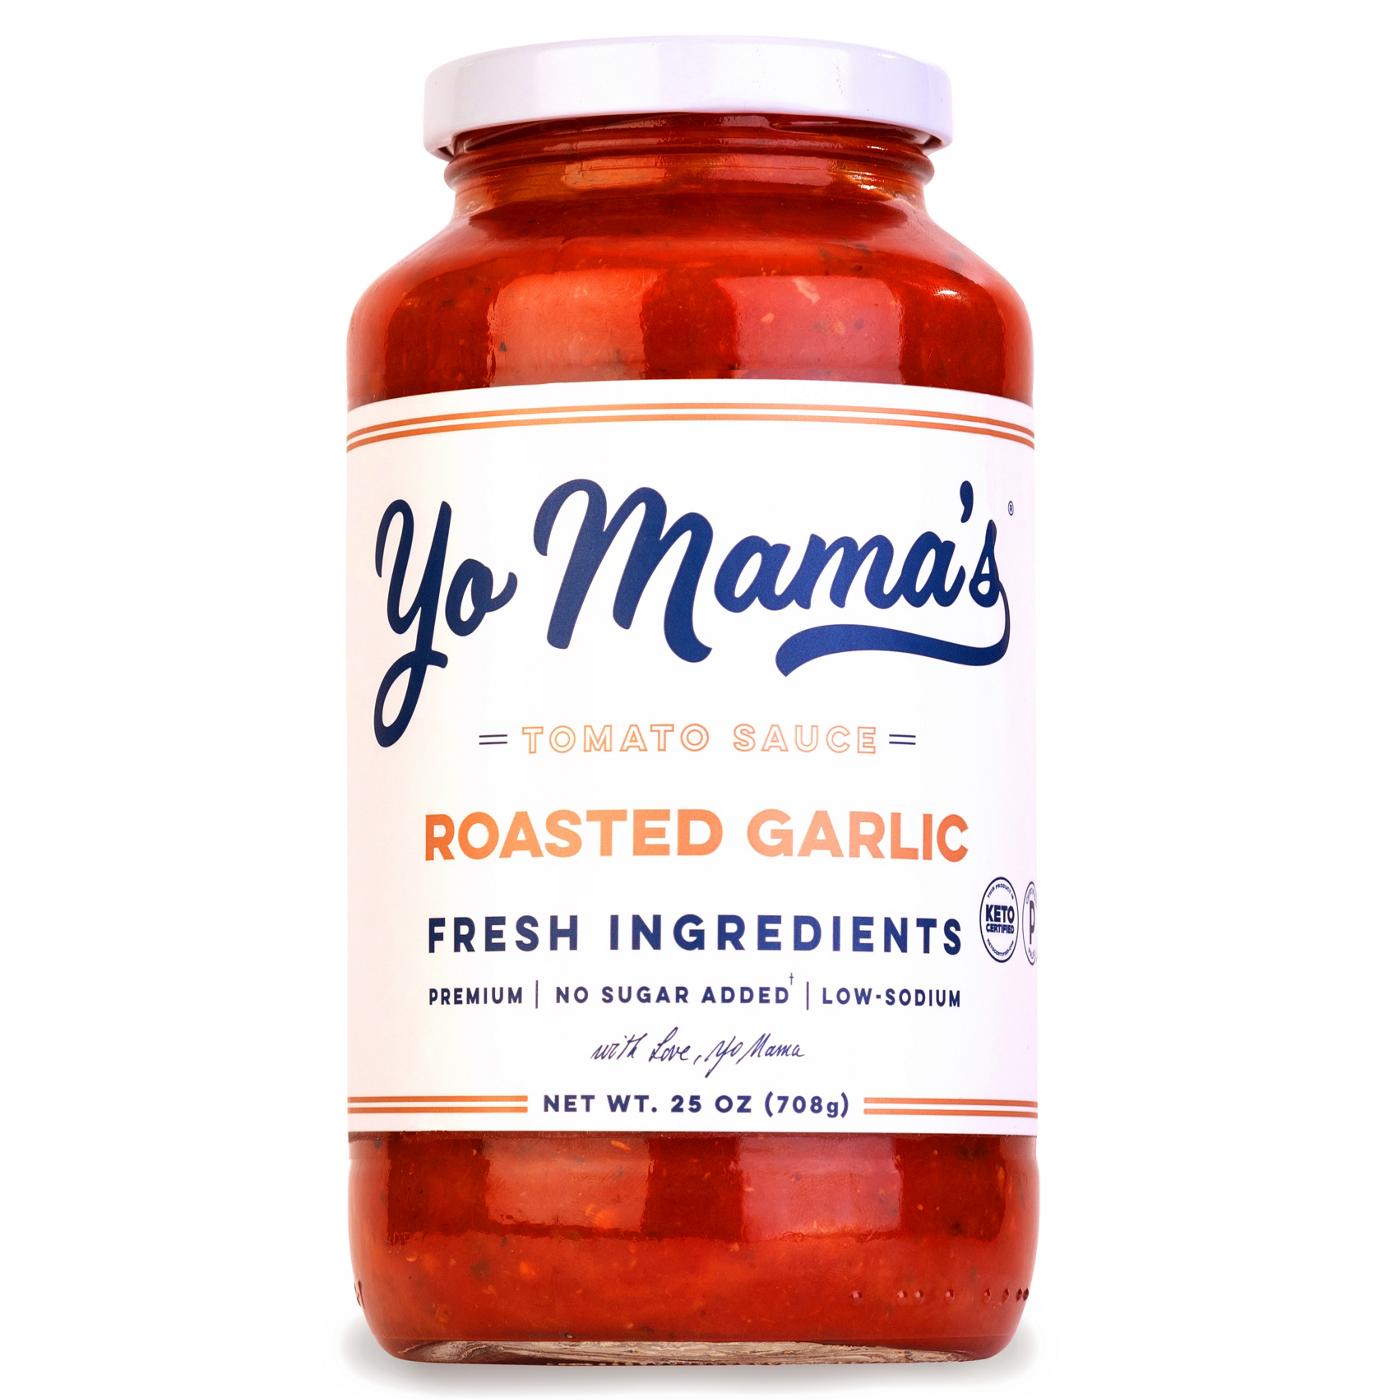 Yo Mama's Roasted Garlic Tomato Sauce; image 1 of 8